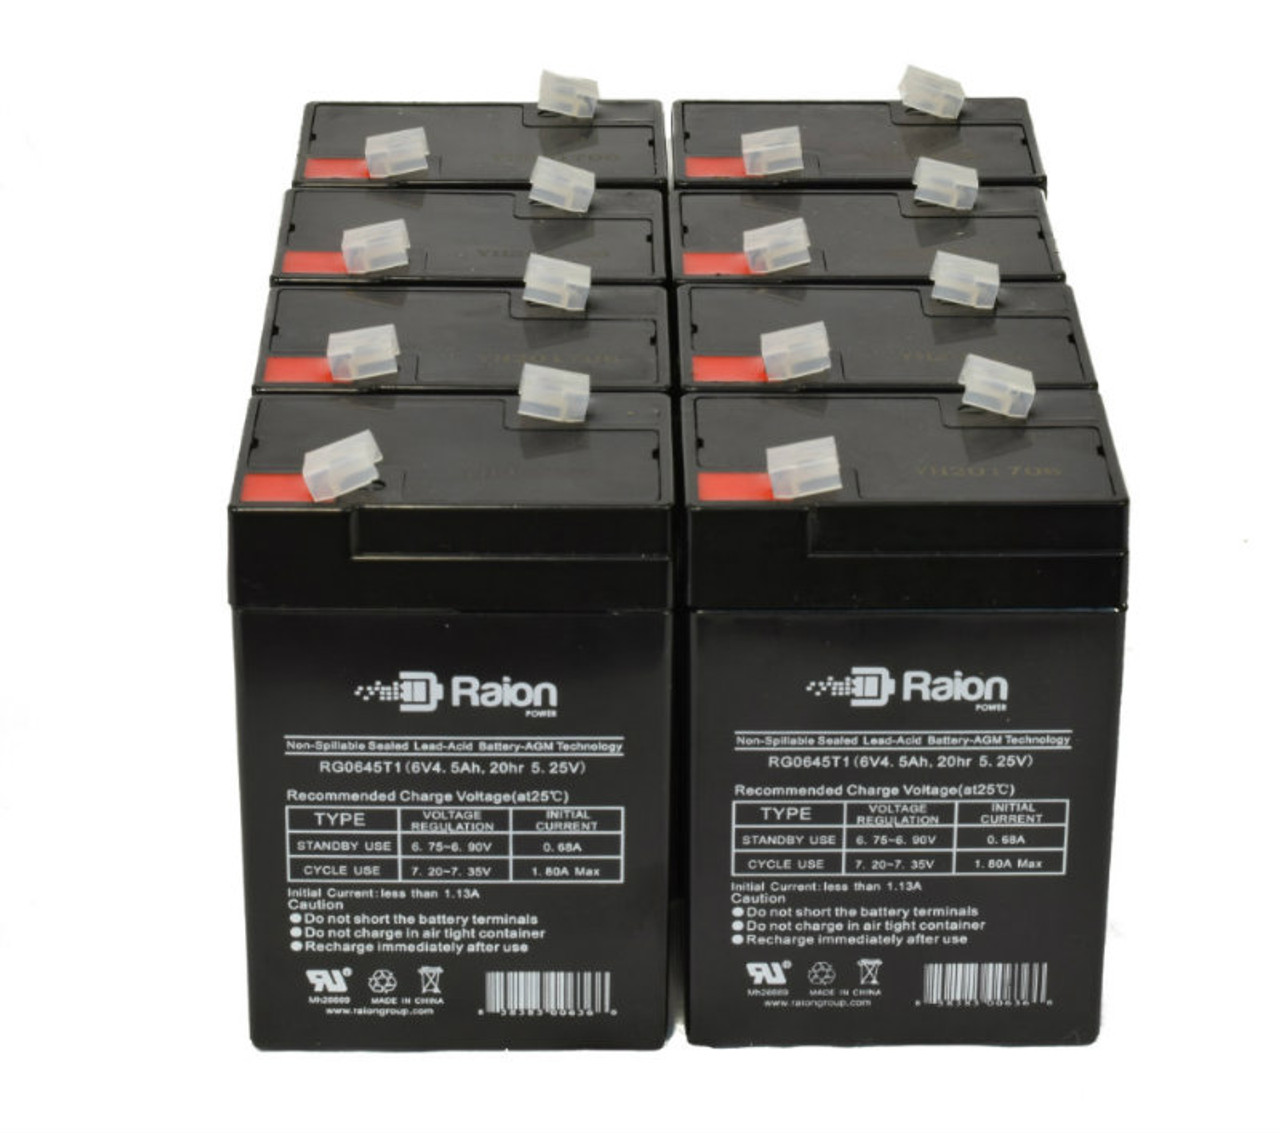 Raion Power 6V 4.5Ah Replacement Emergency Light Battery for Elsar 120 - 8 Pack